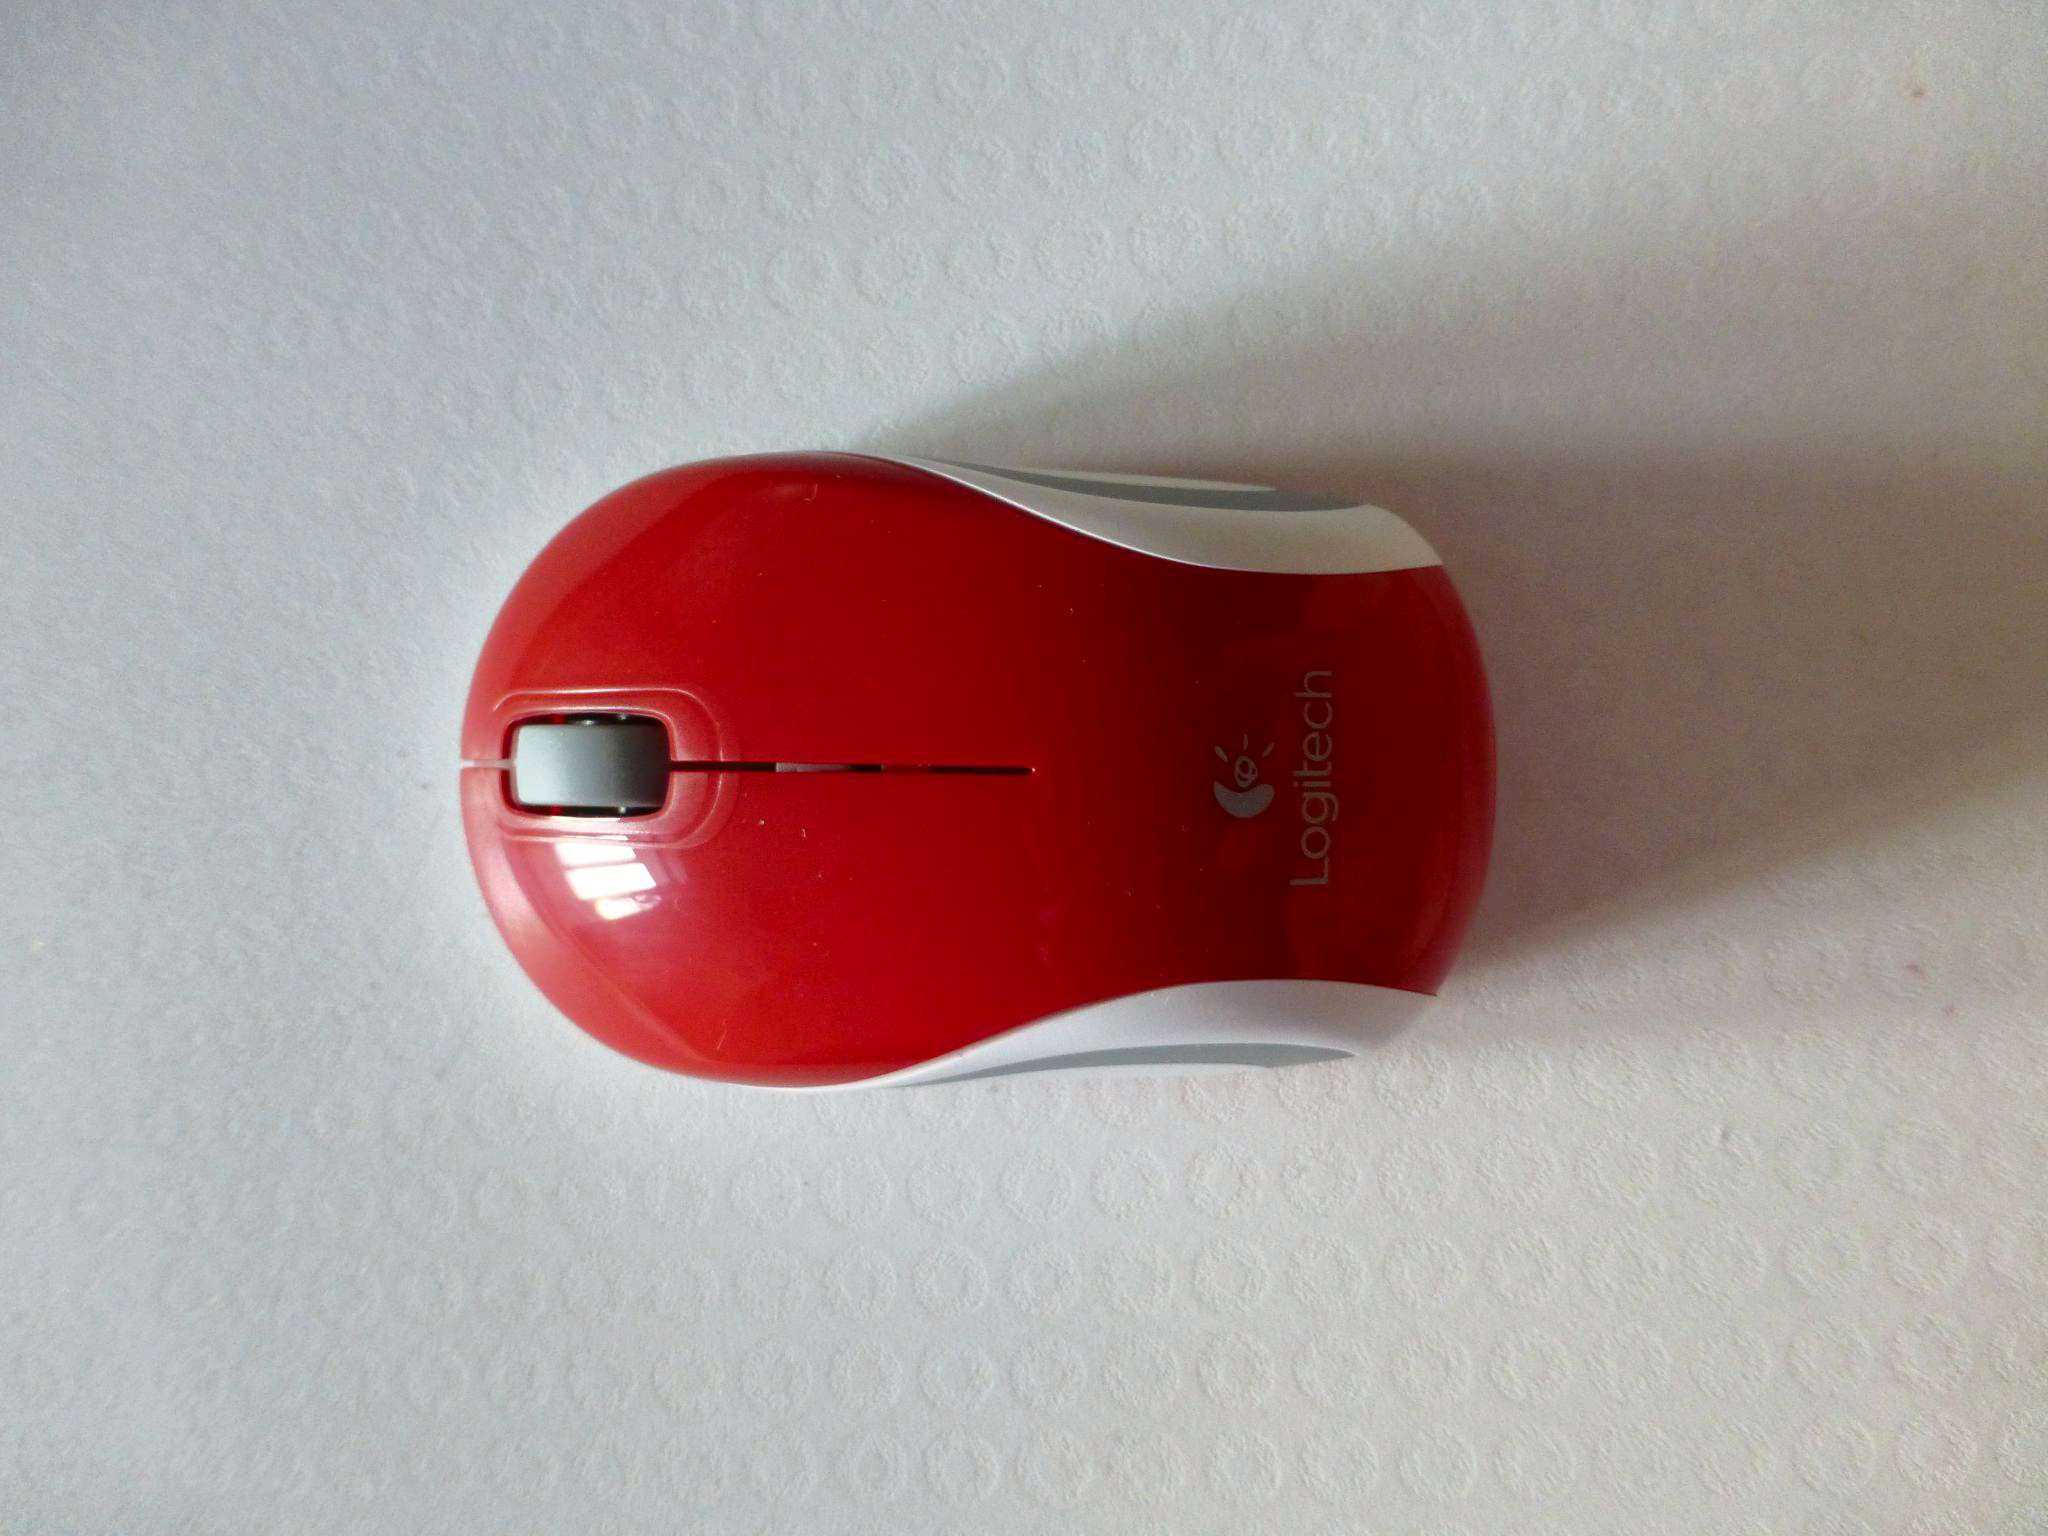 Мышь logitech wireless mini mouse m187 (910-002732) red